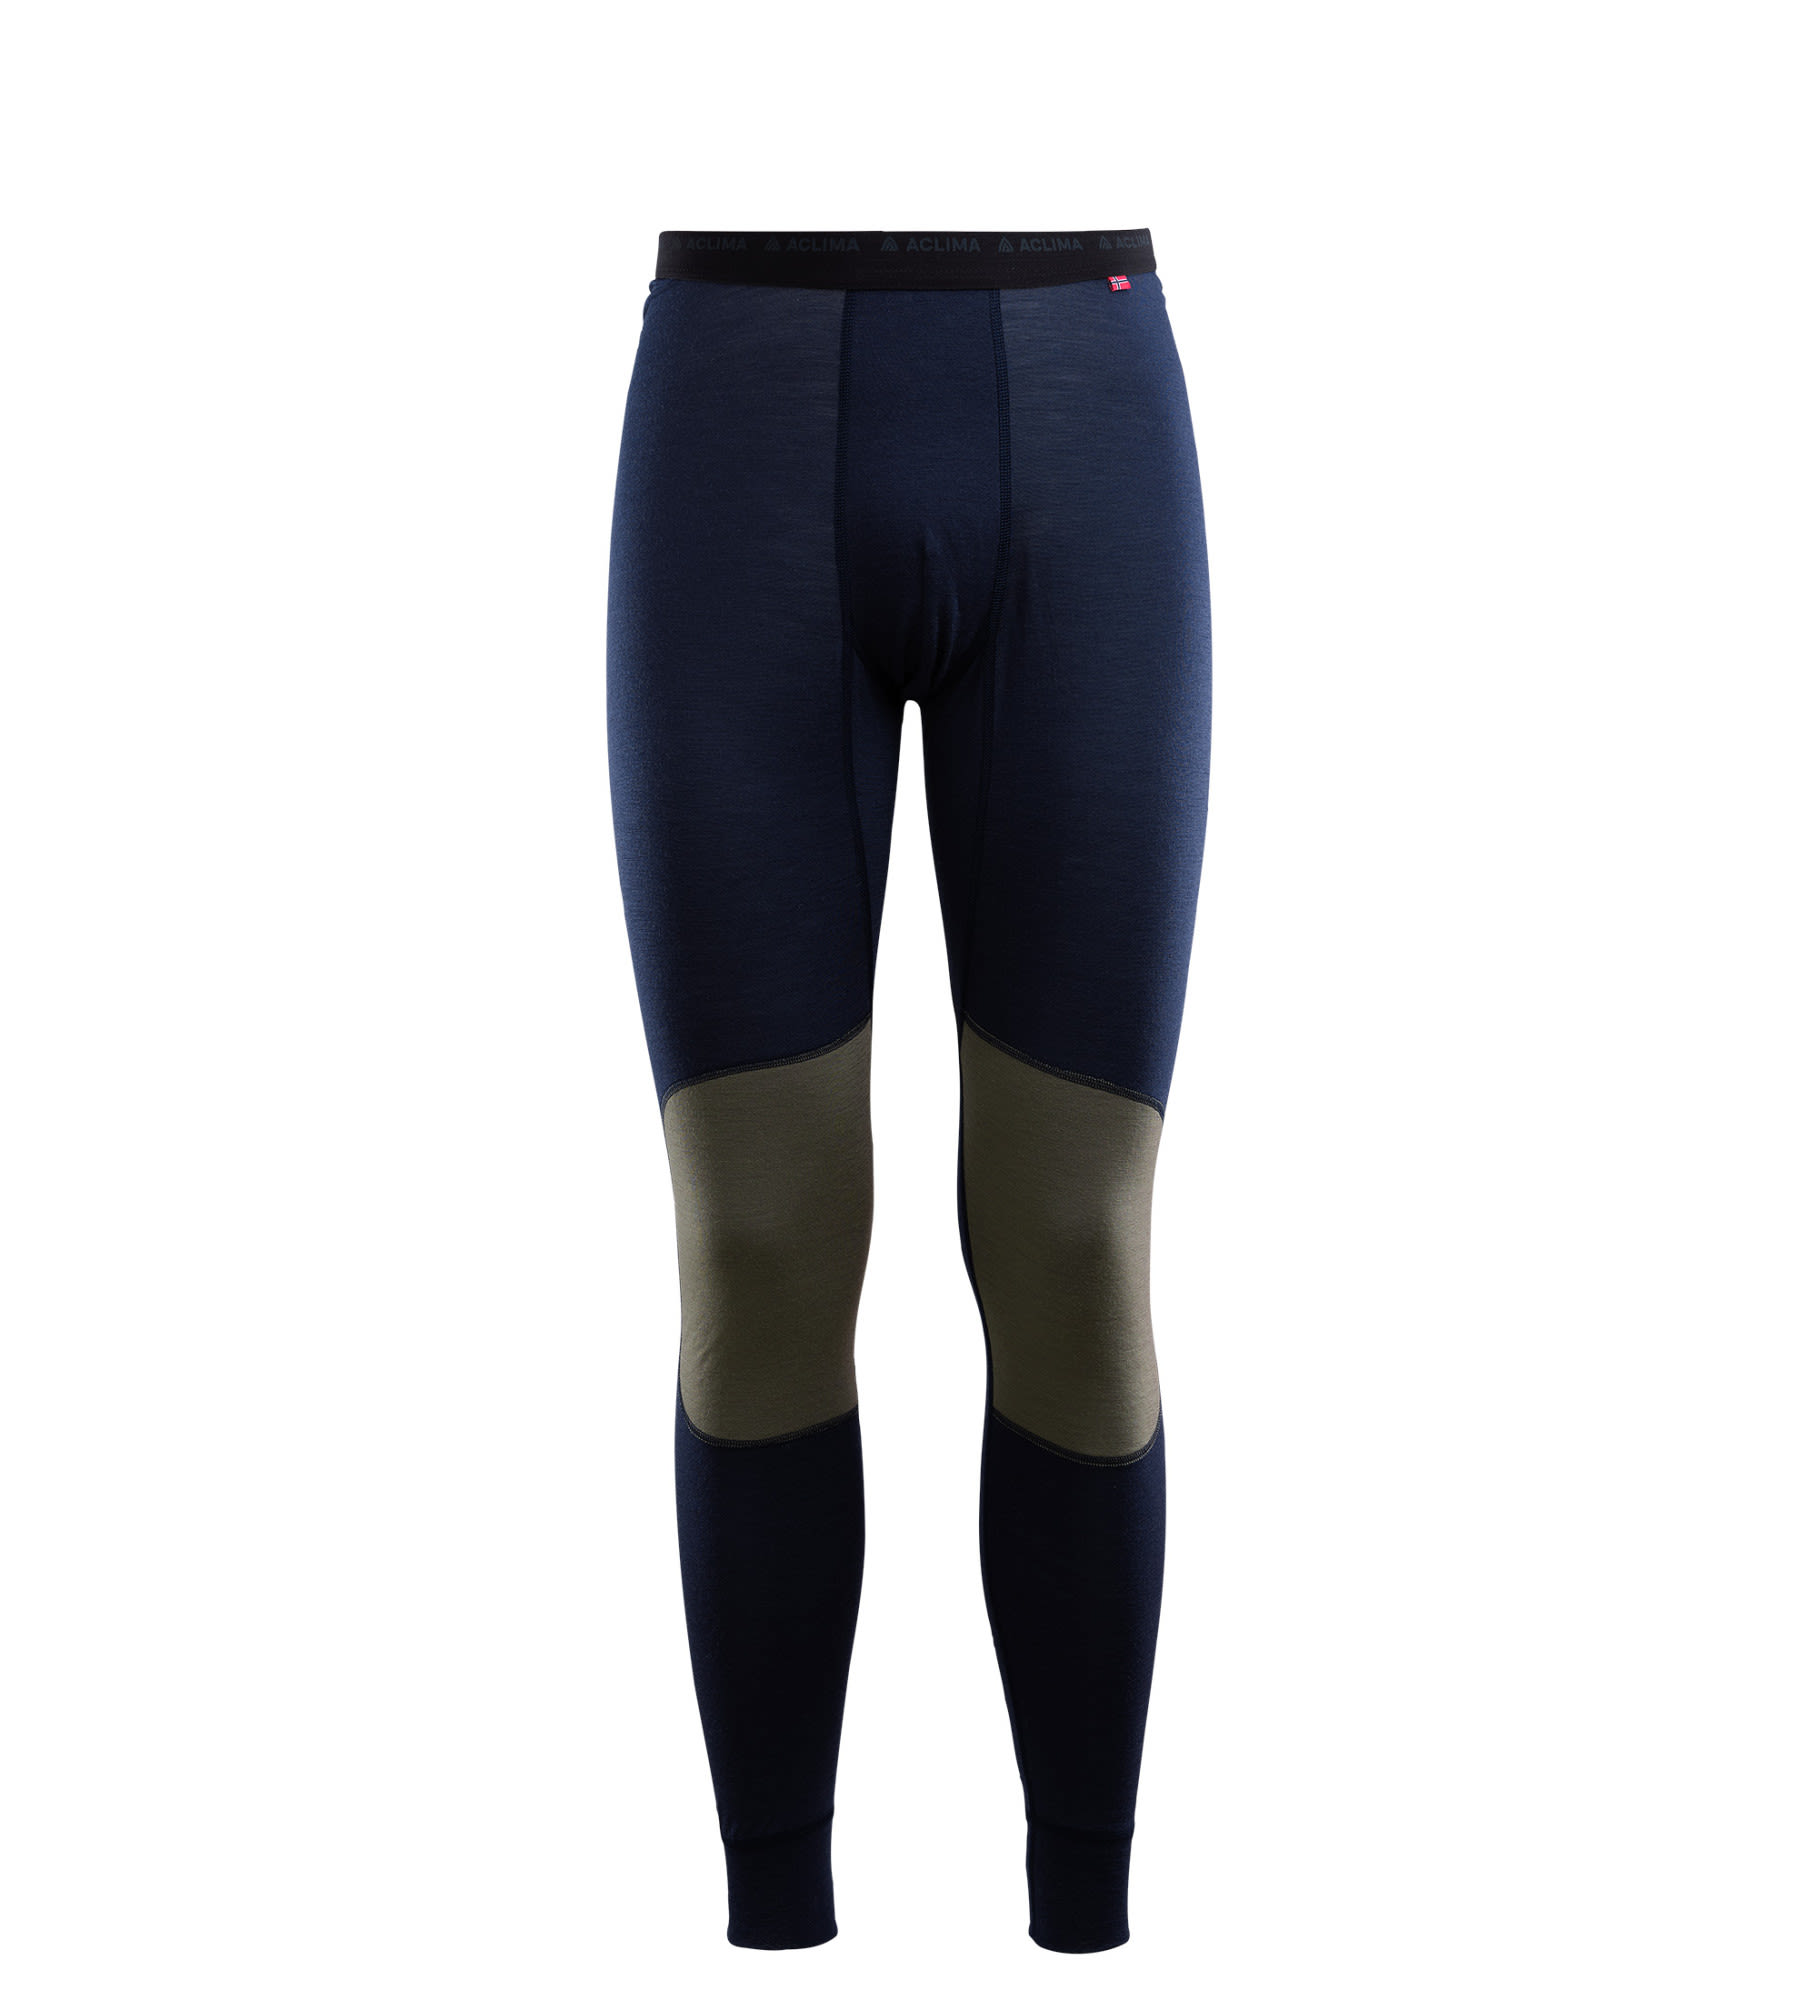 Aclima Lightwool Reinforced Long Pants Blau- Male Merino Leggings und Tights- Grsse S - Farbe Navy Blazer - Ranger Green unter Aclima